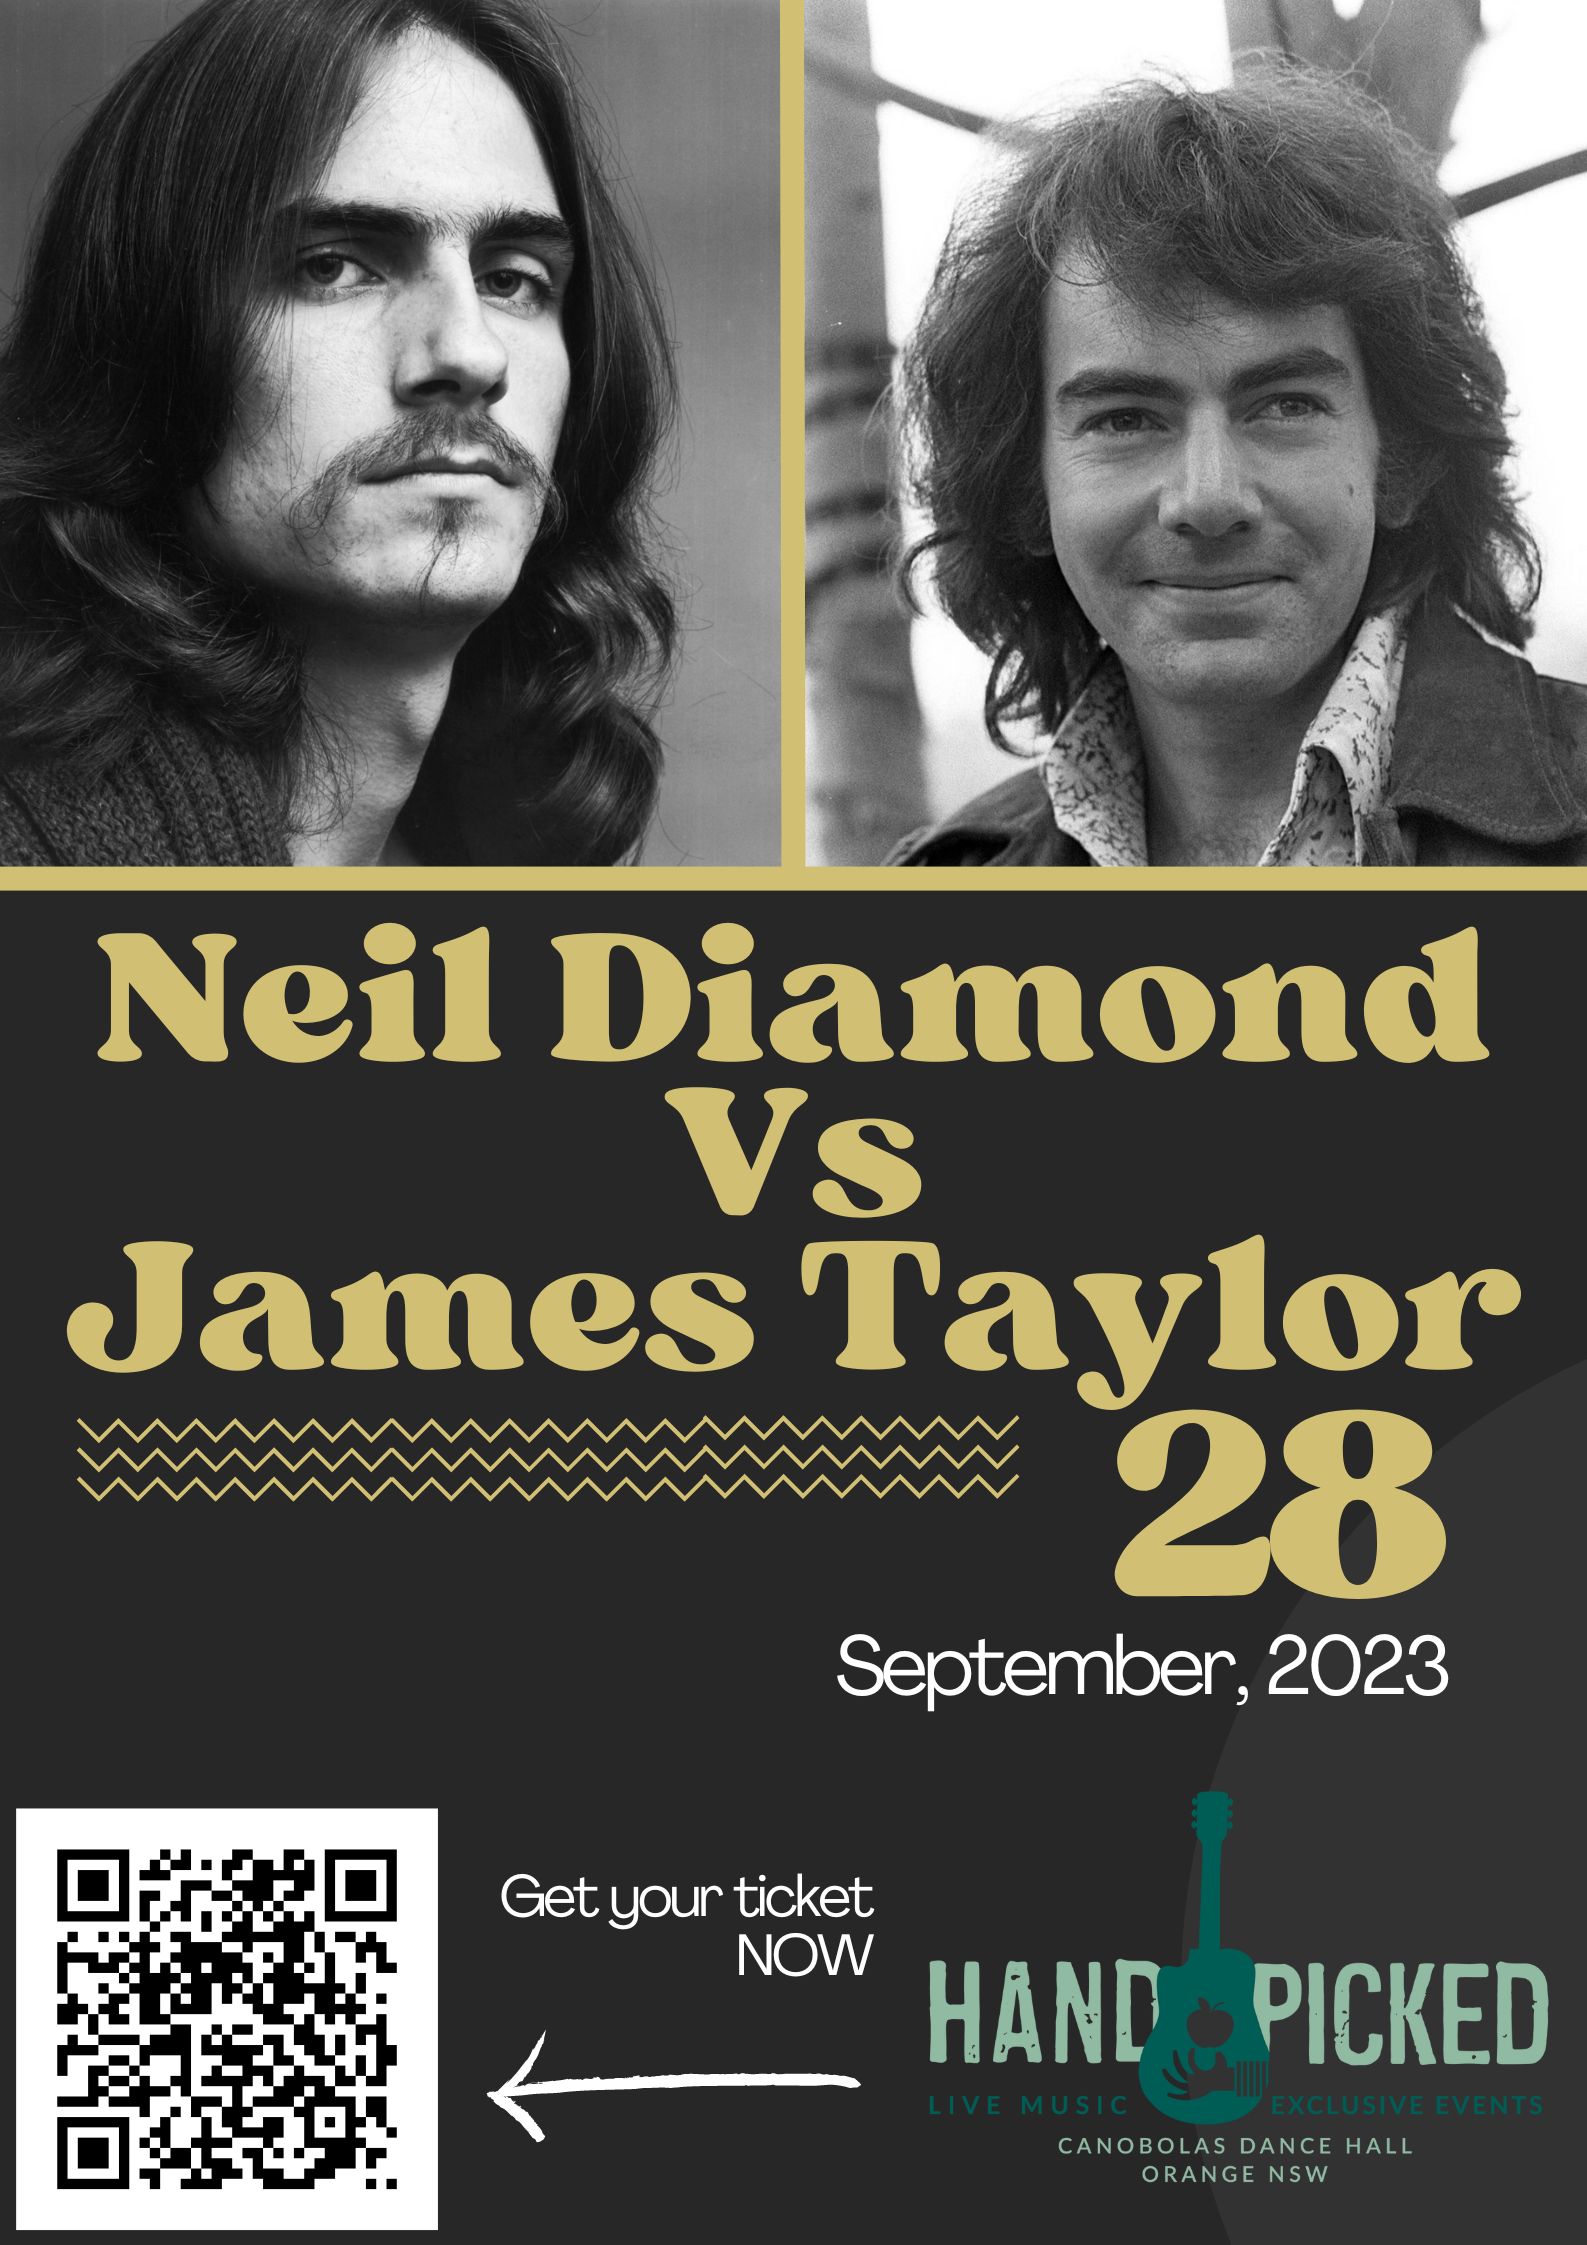 James Taylor Vs Neil Diamond poster - Live Music